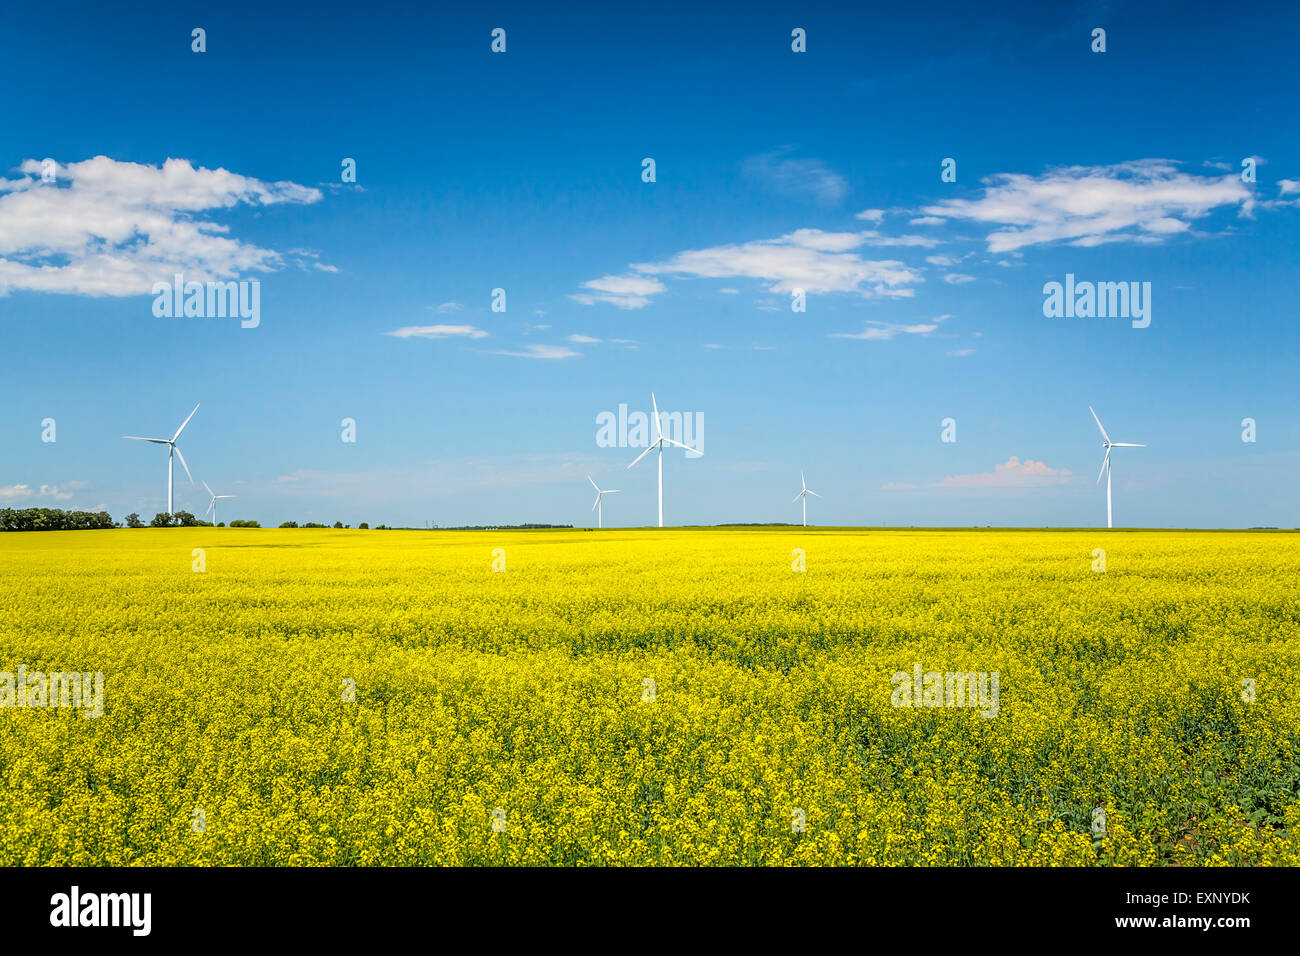 Canola field and wind farm near St. Leon, Manitoba, Canada. Stock Photo